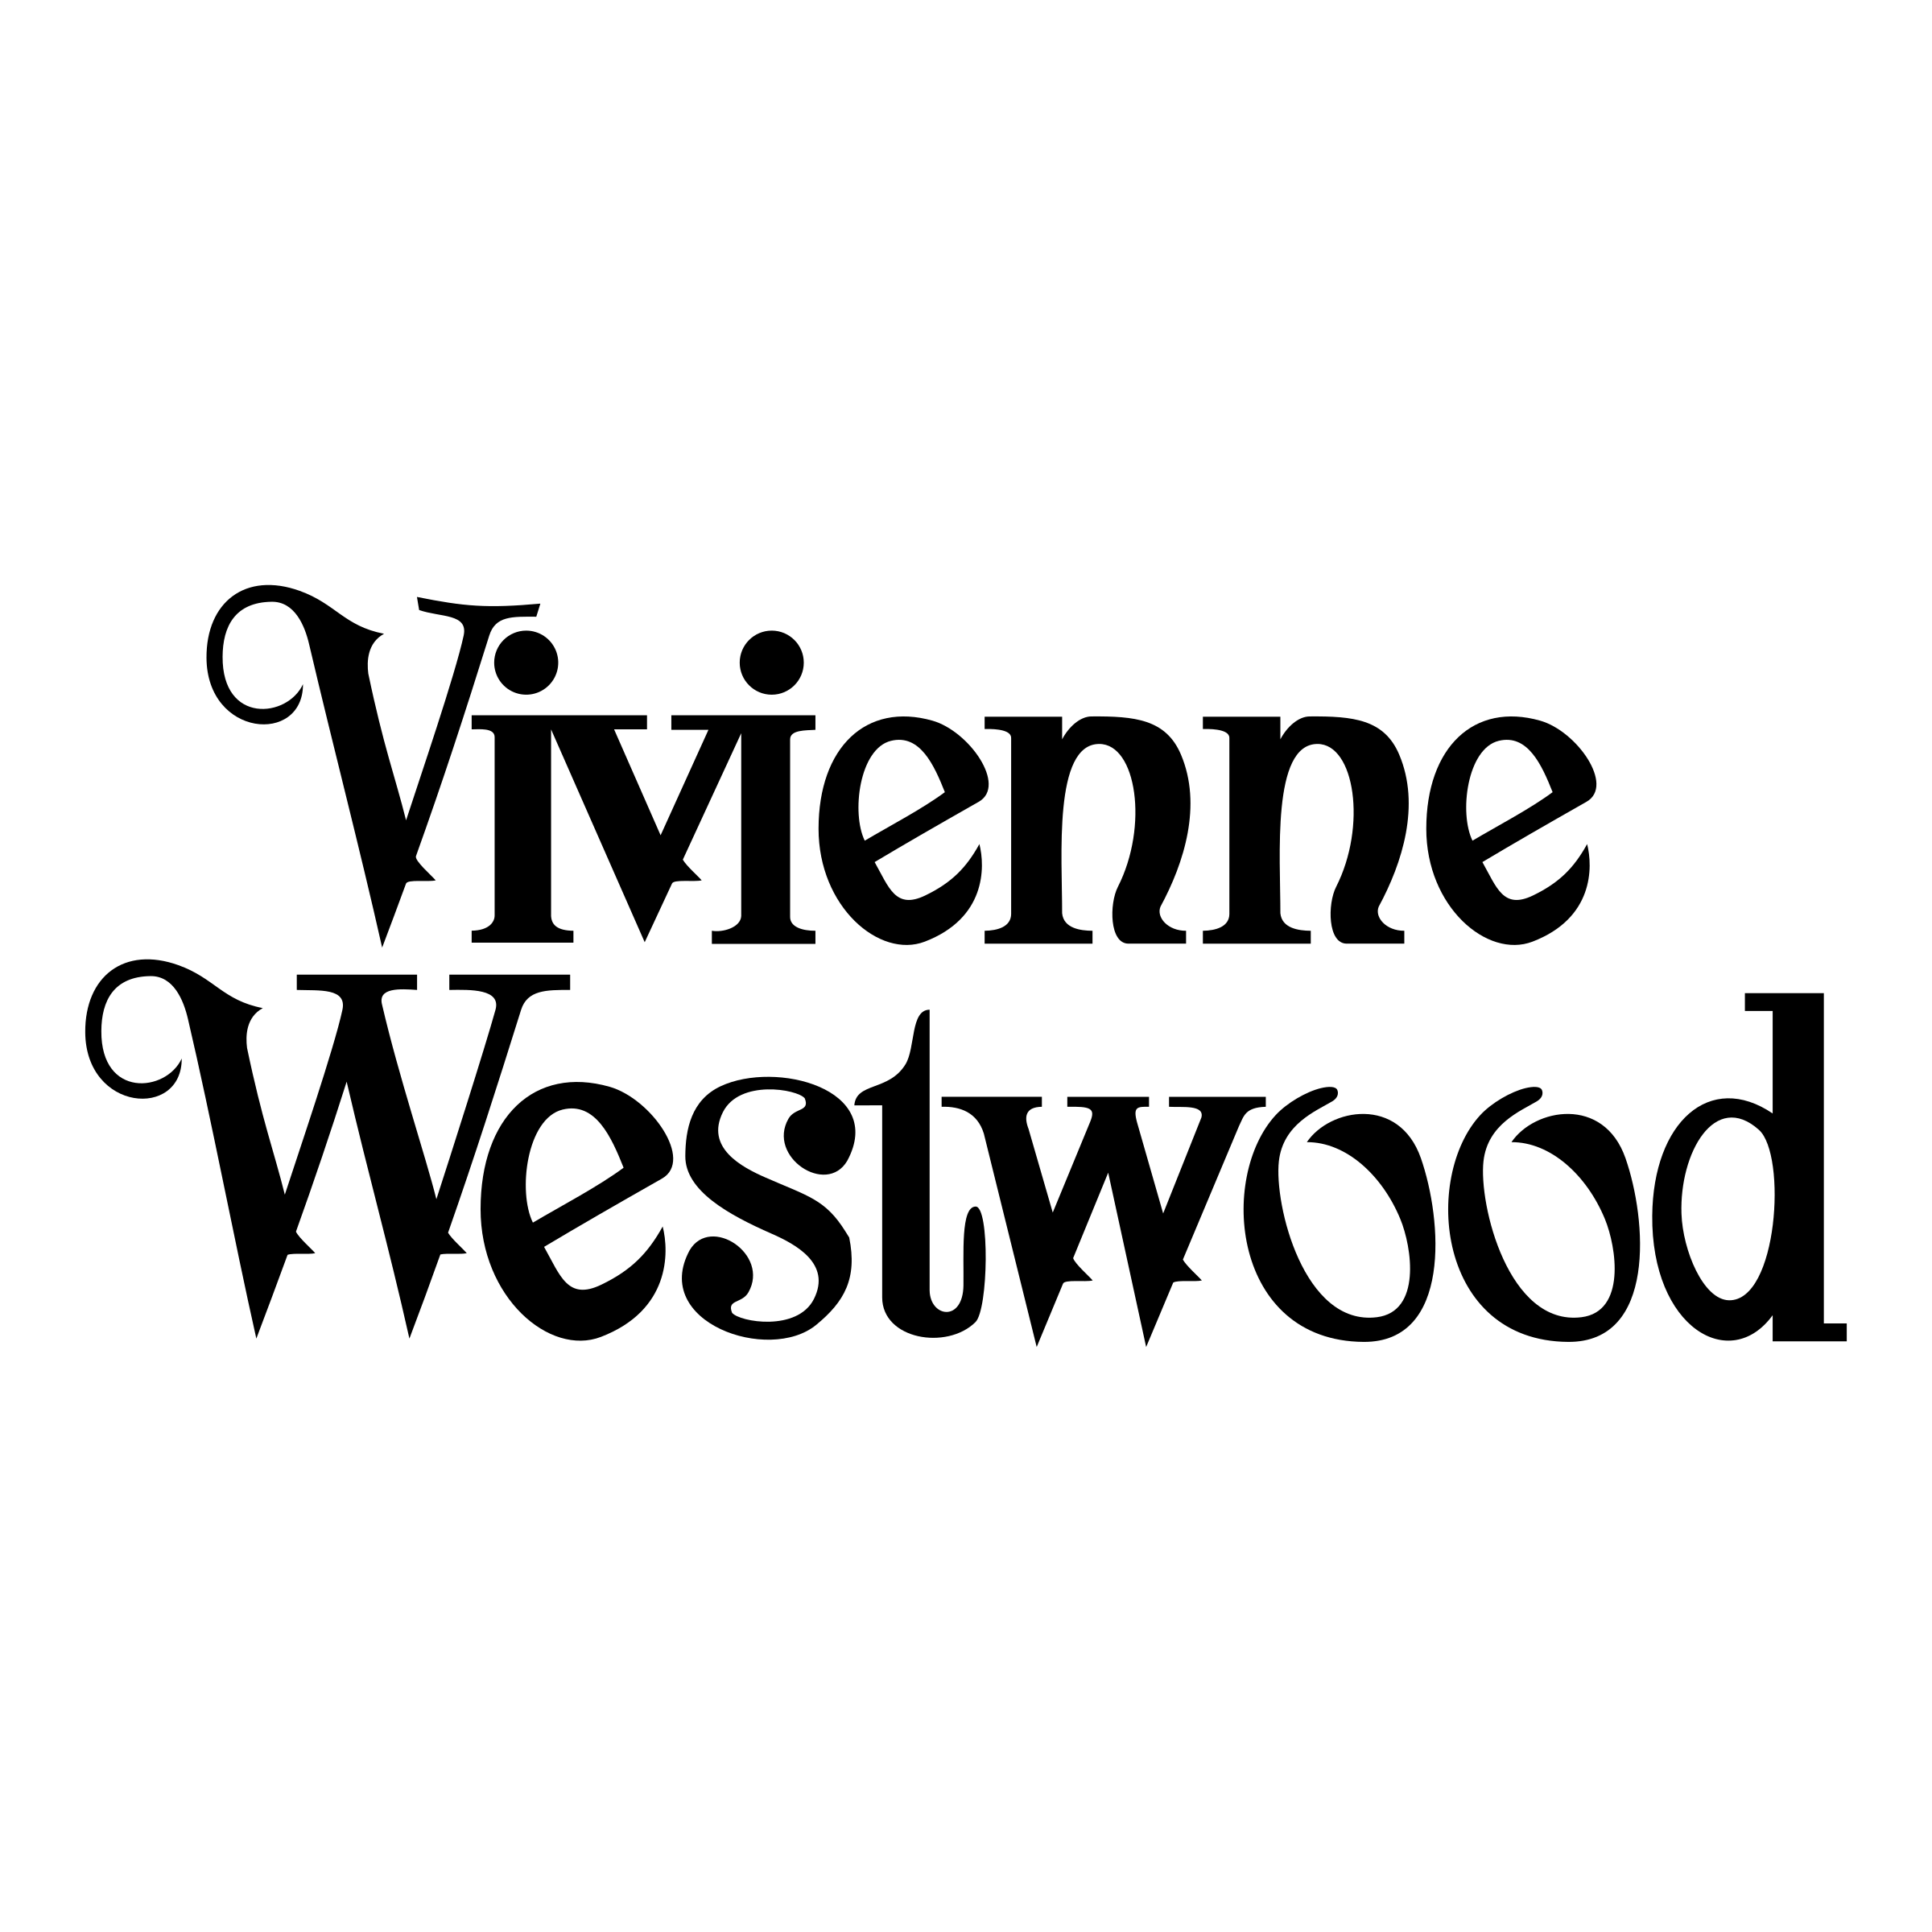 Vivienne Westwood Logo - Vivienne Westwood Logo PNG Transparent & SVG Vector - Freebie Supply